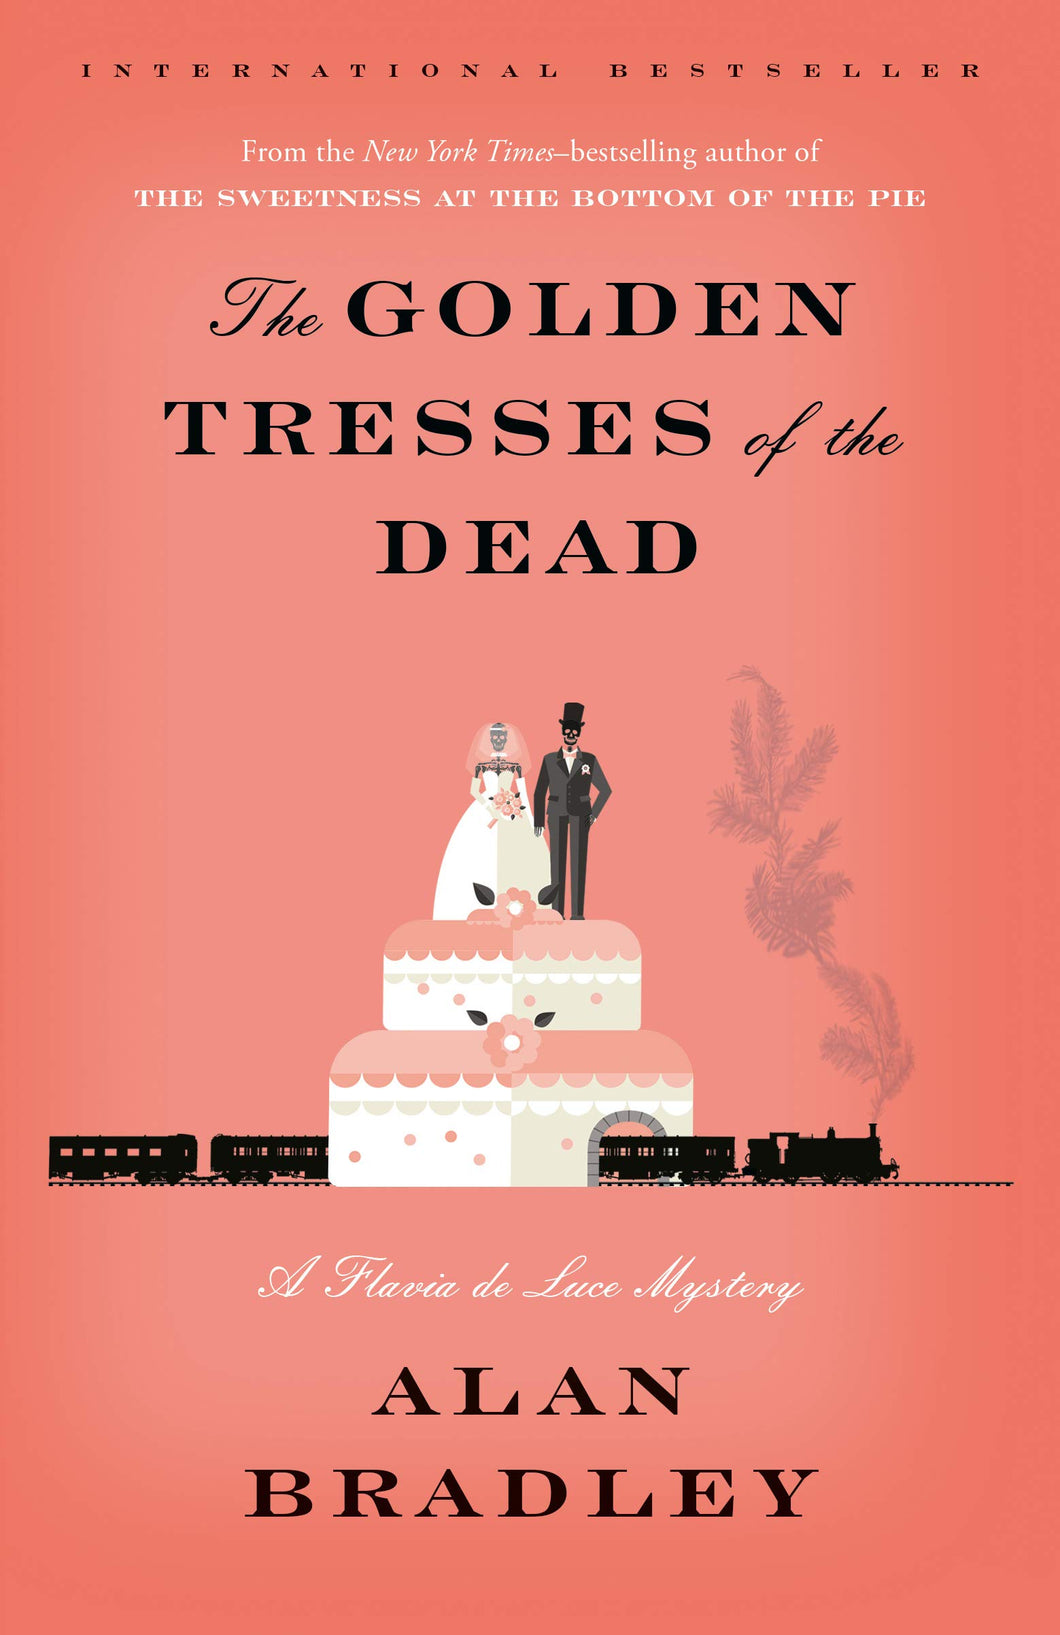 The Golden Tresses of the Dead [Alan Bradley]